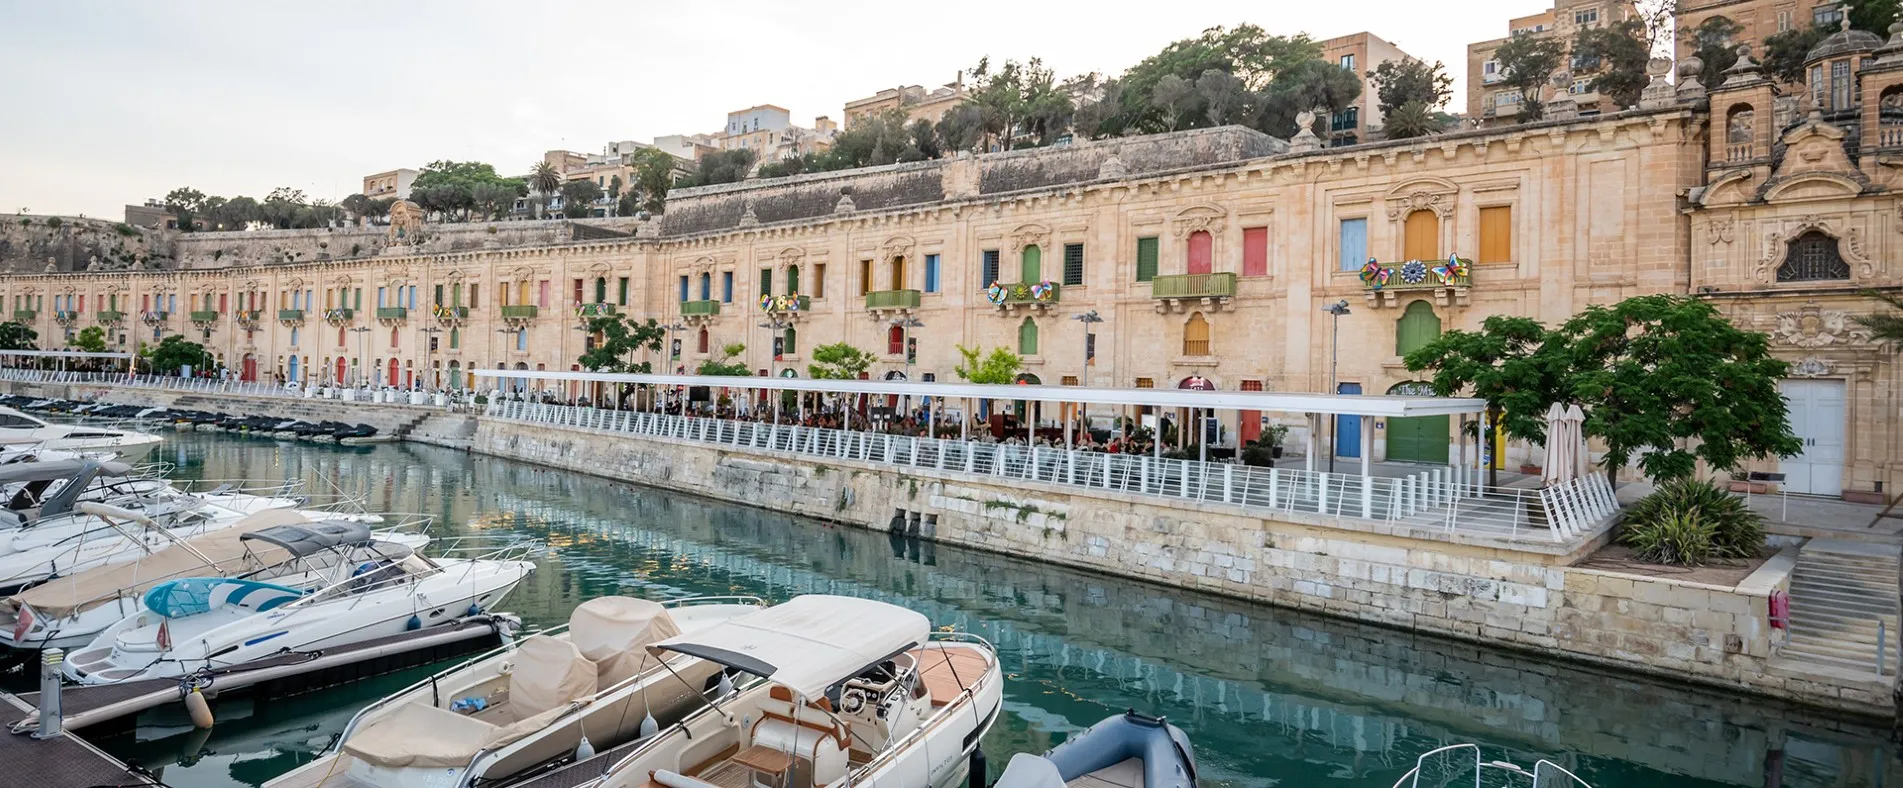 The Valletta Waterfront in Malta, Europe | Architecture,Restaurants,Bars - Rated 5.7